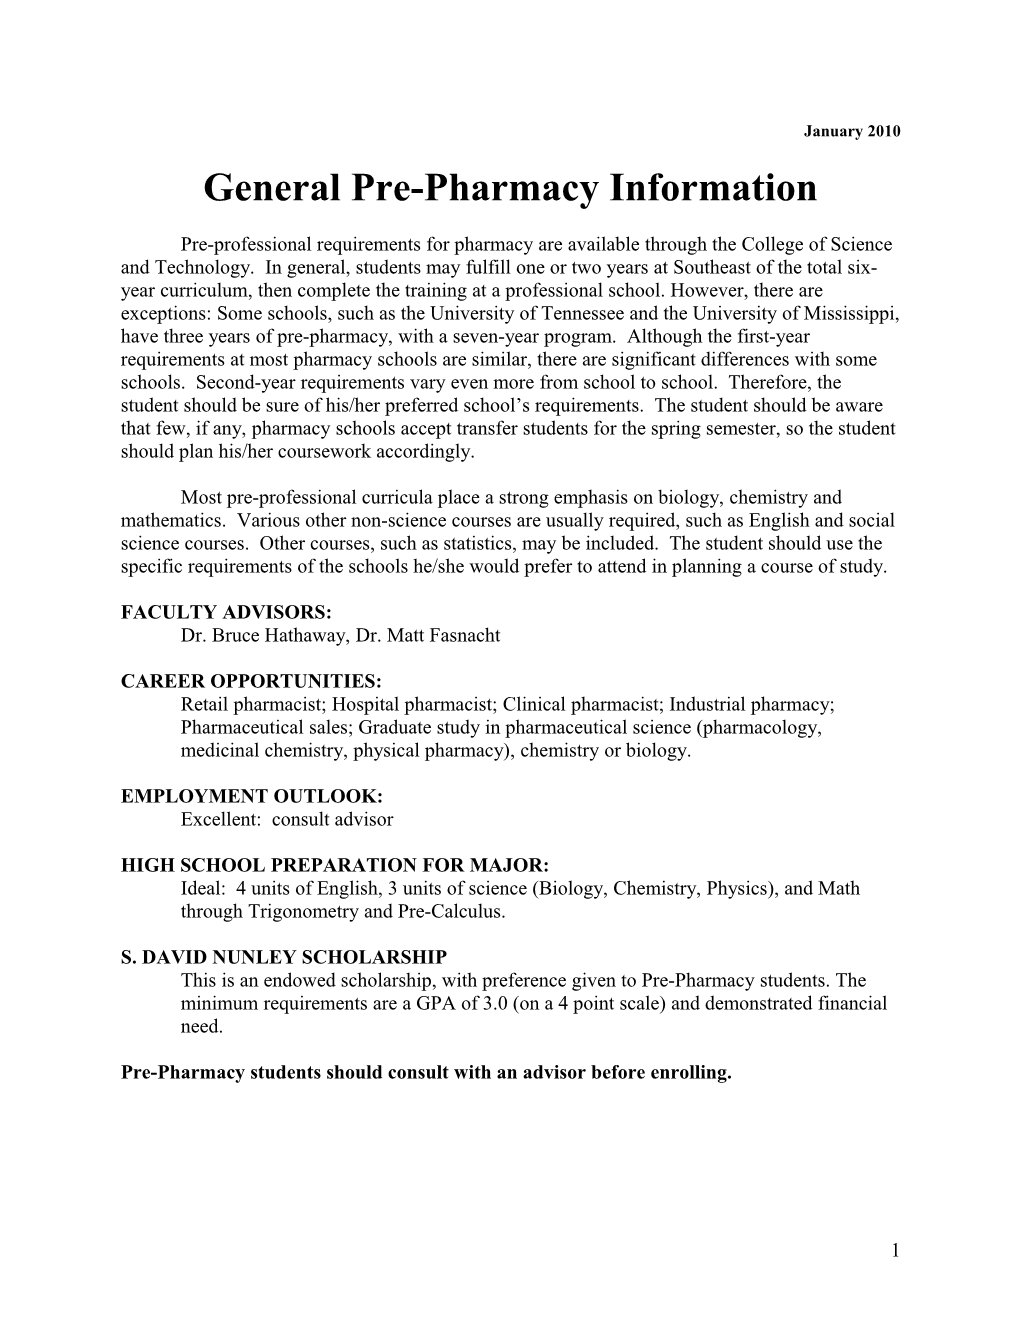 General Pre-Pharmacy Information